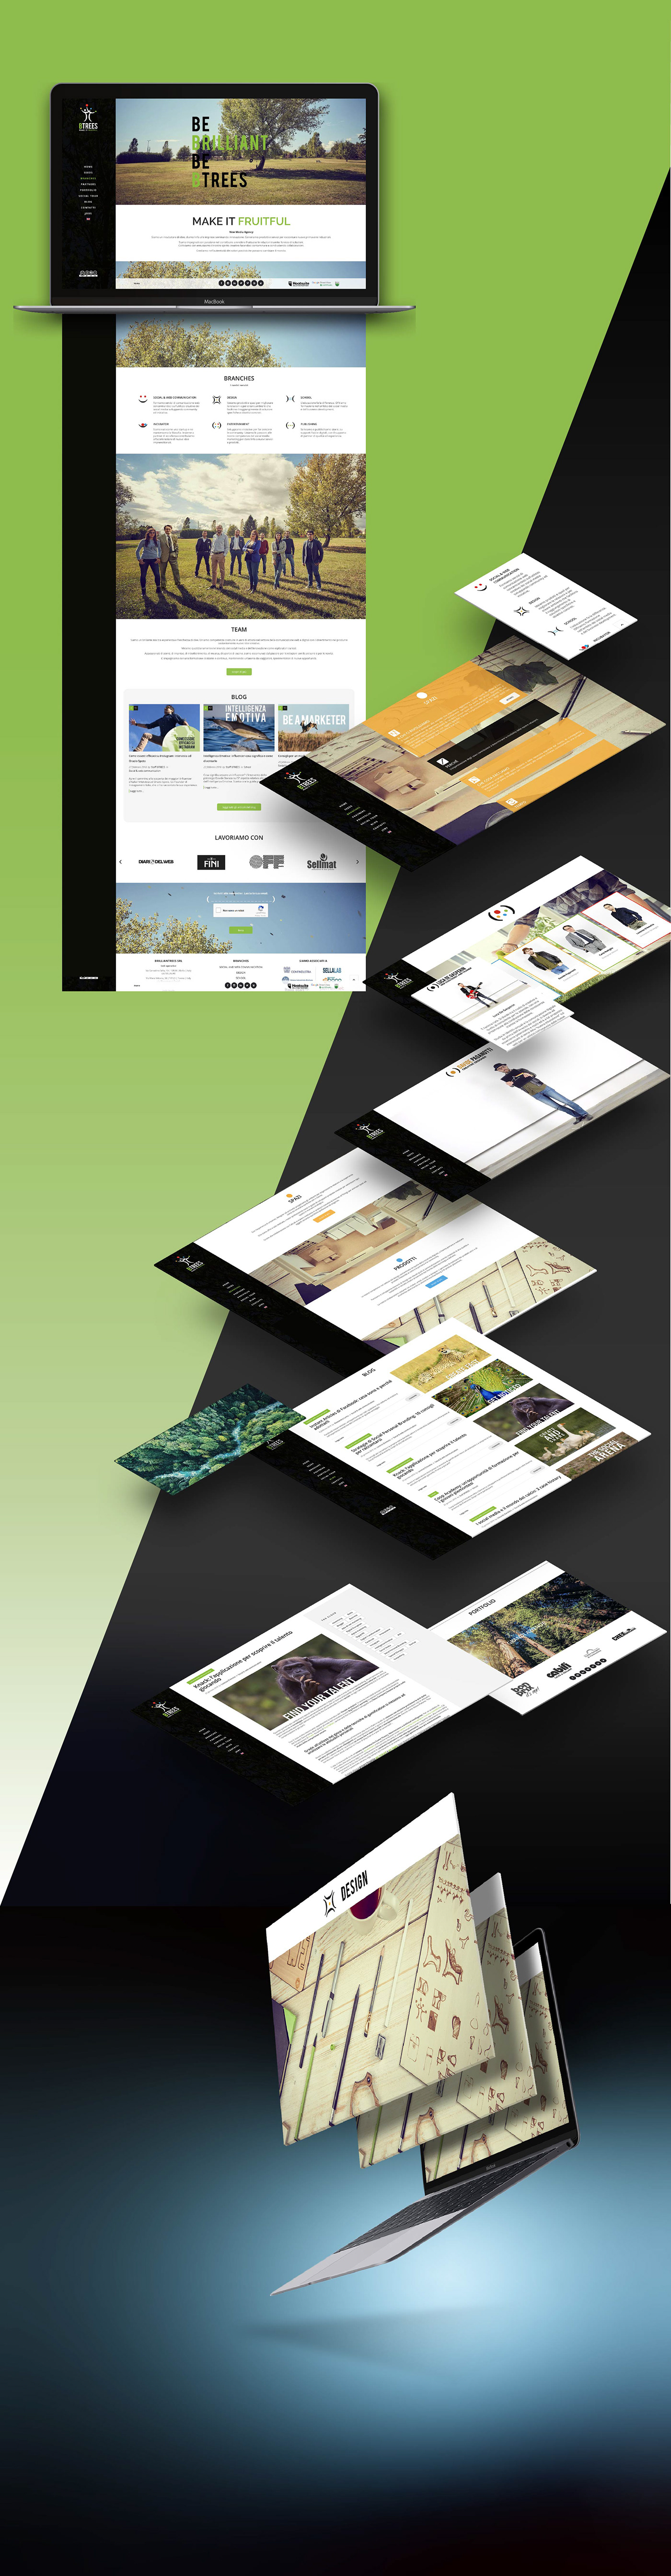 BTREES web design